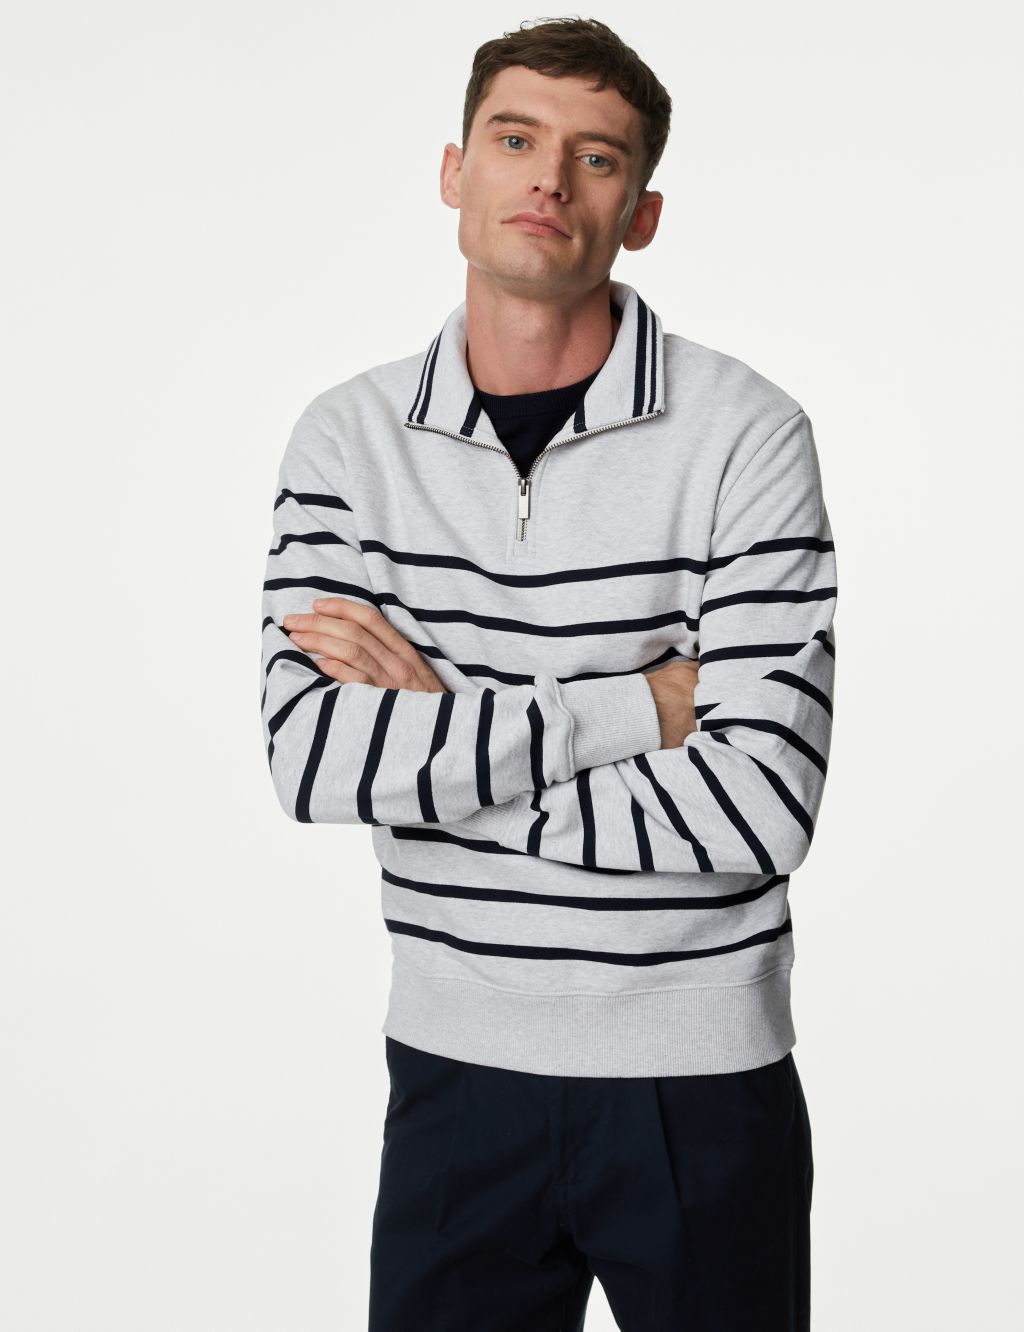 Pure Cotton Striped Sweatshirt image 1